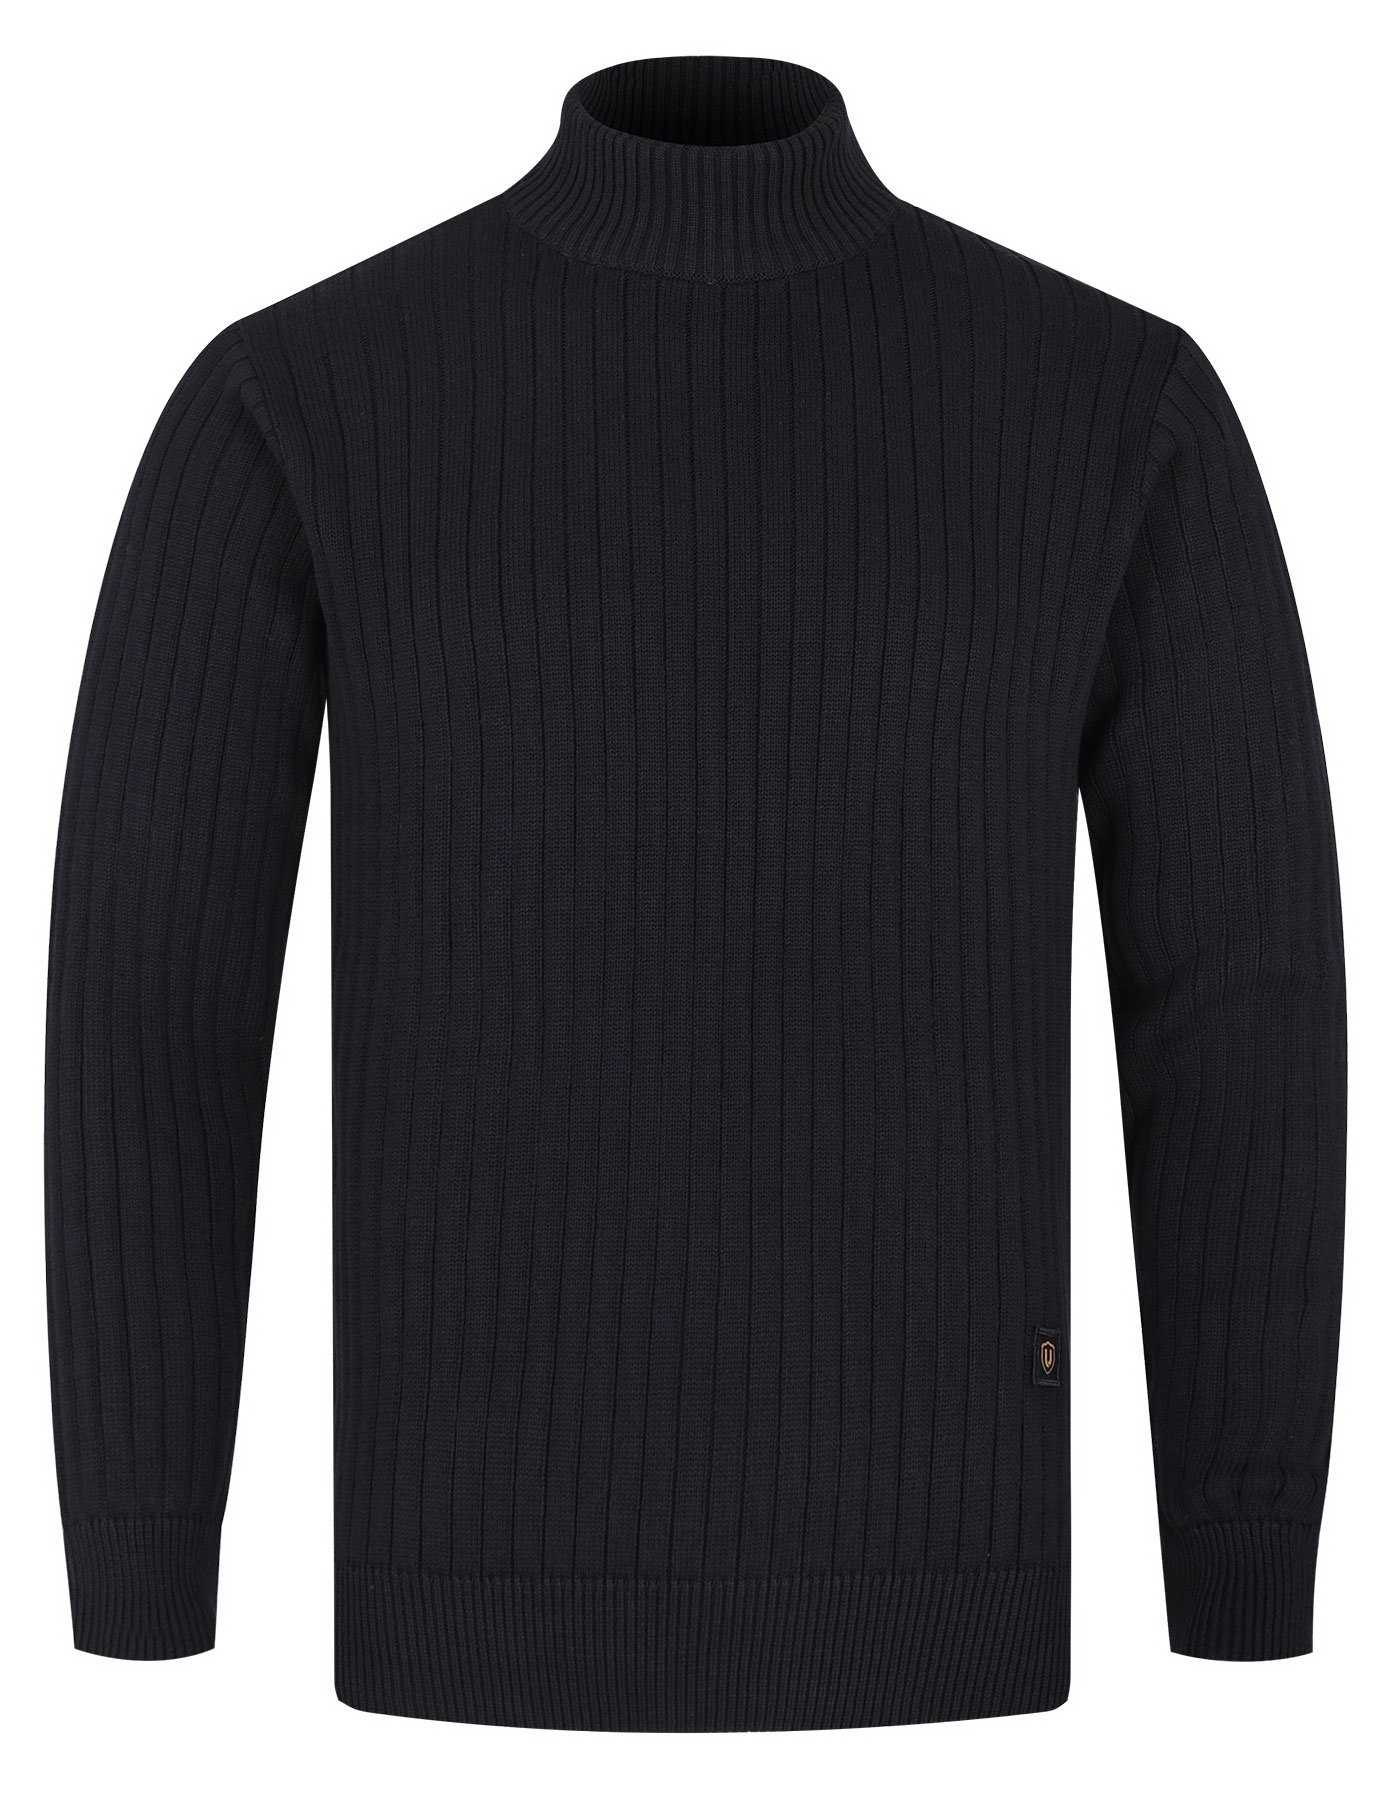 Sweater Black SFA2314 Pull Over Uniworth